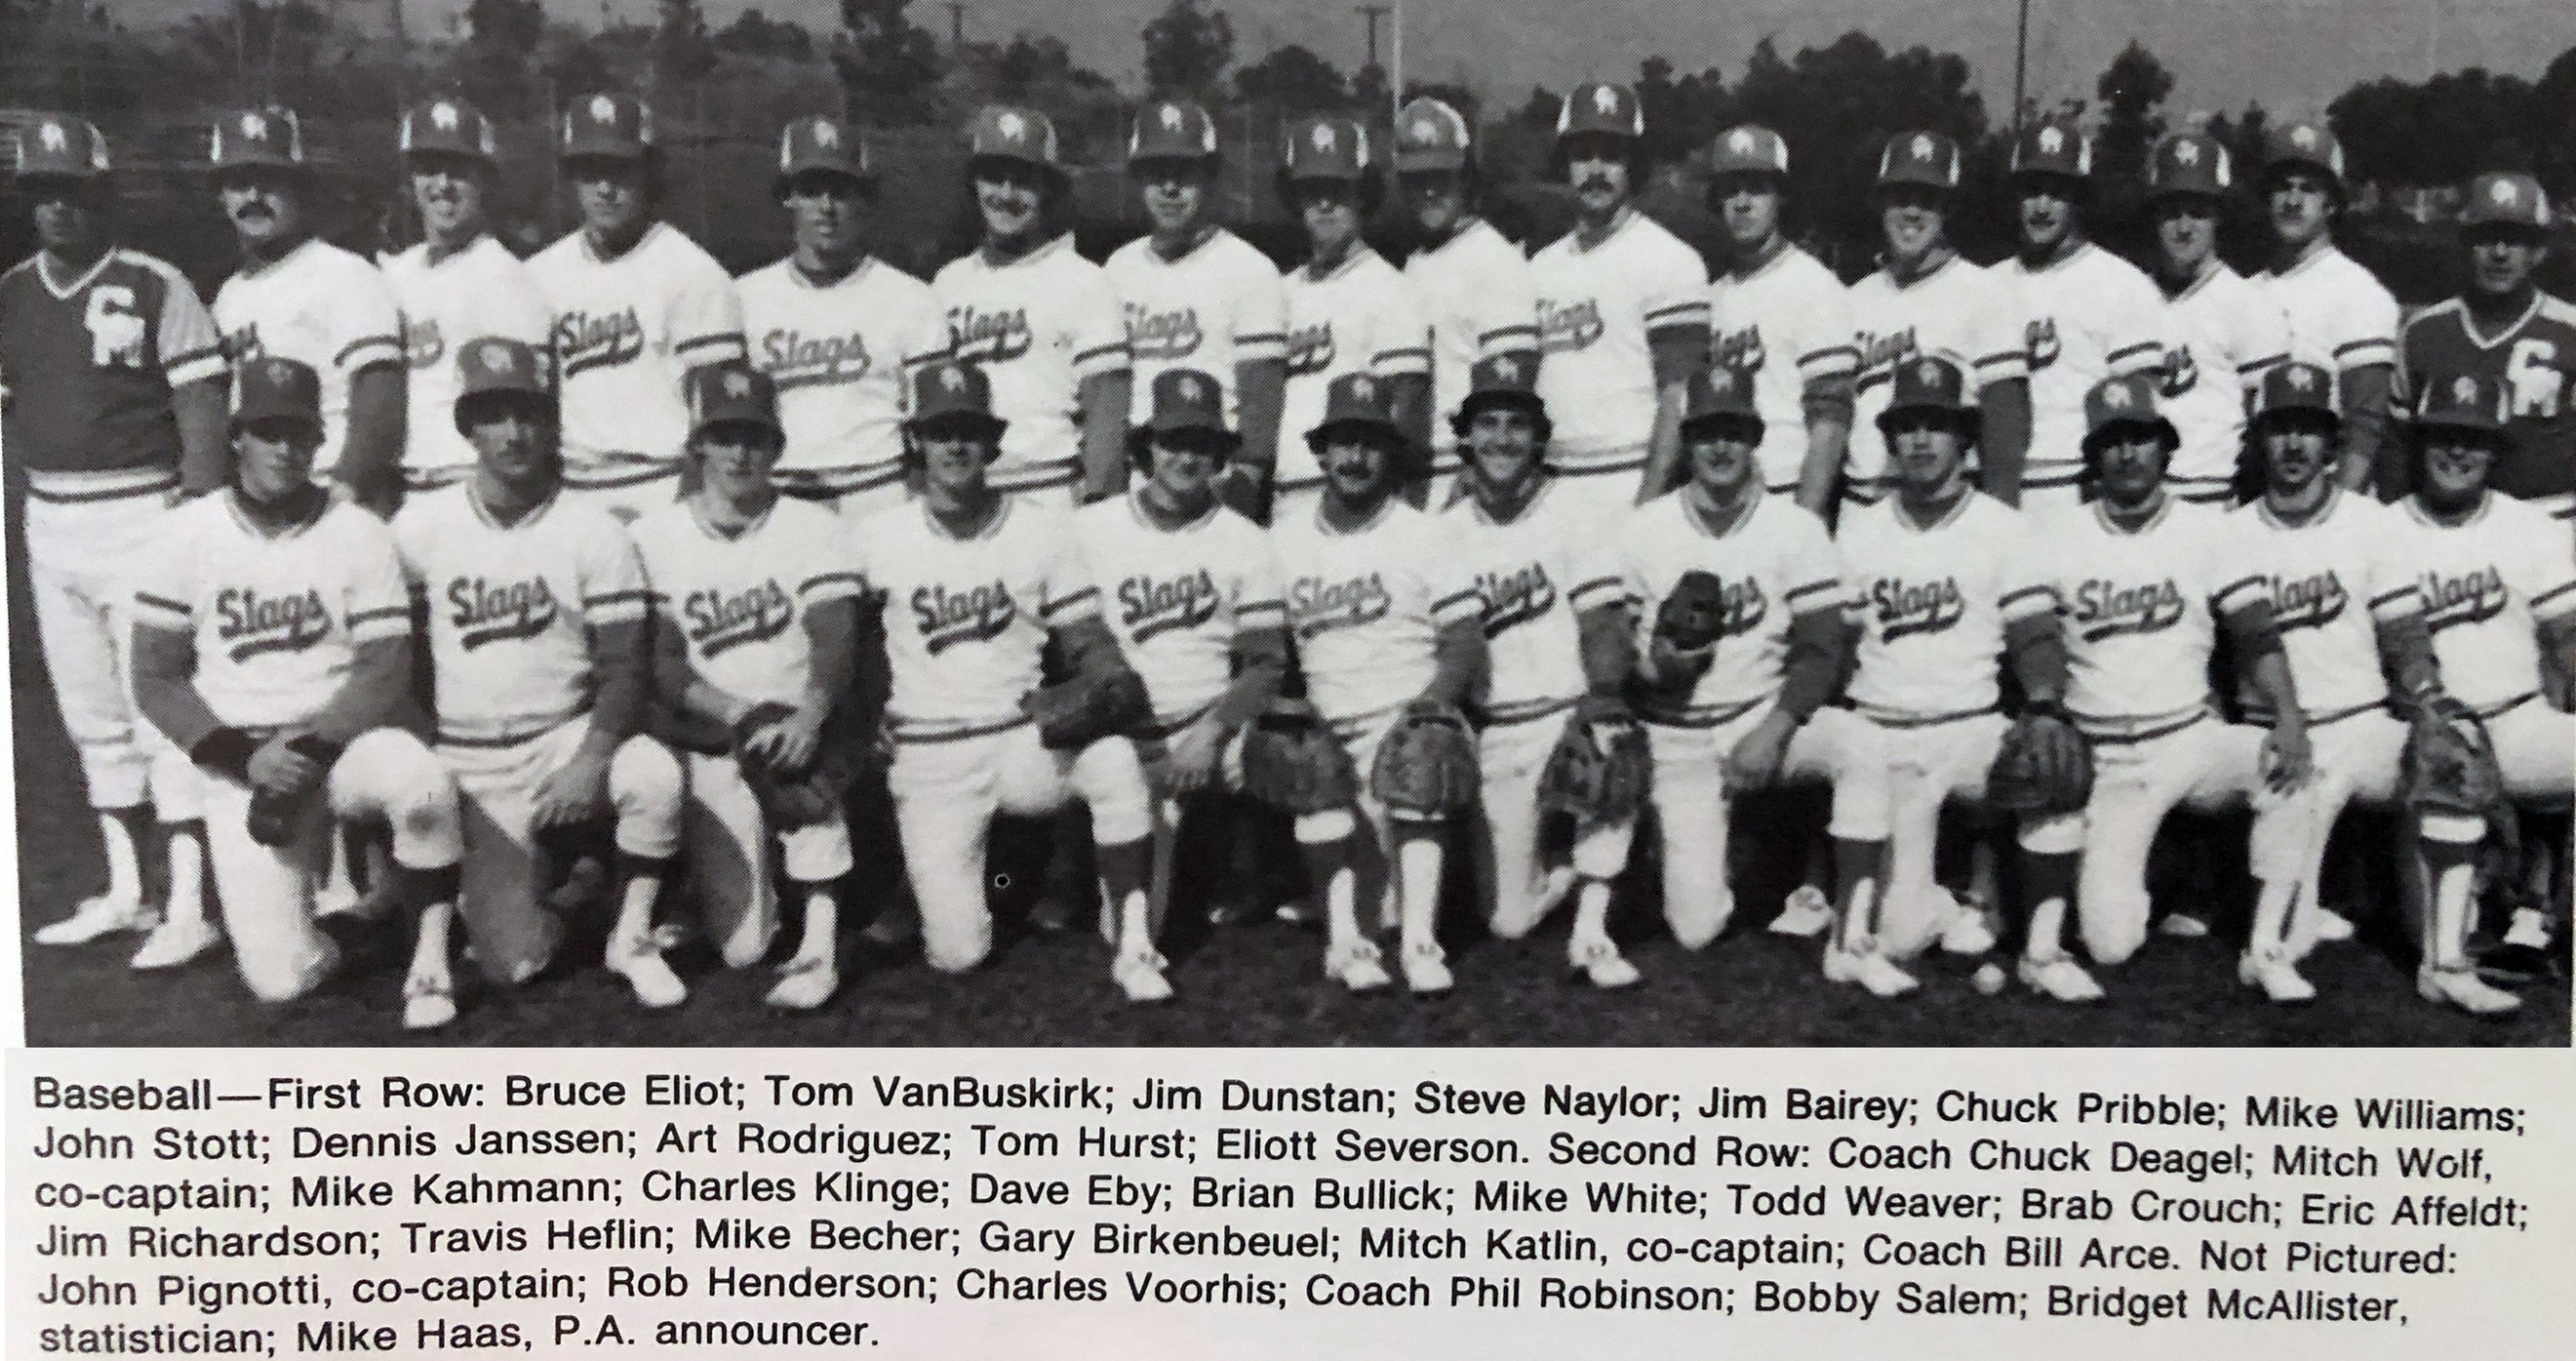 Team photo of the 1979 baseball team